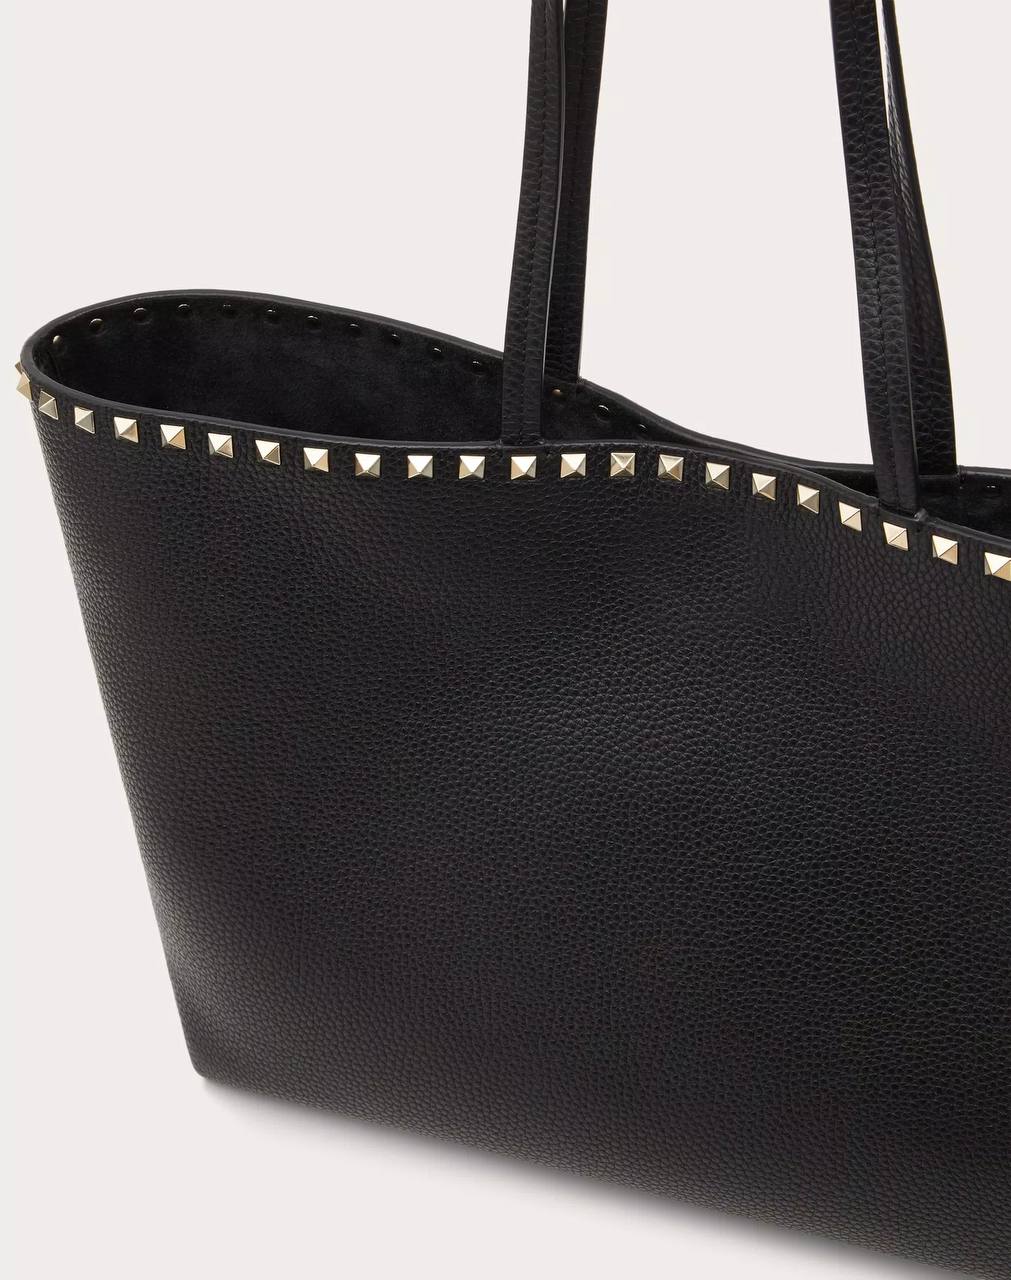 Valentino Garavani Rockstud tote bag in grainy calfskin leather